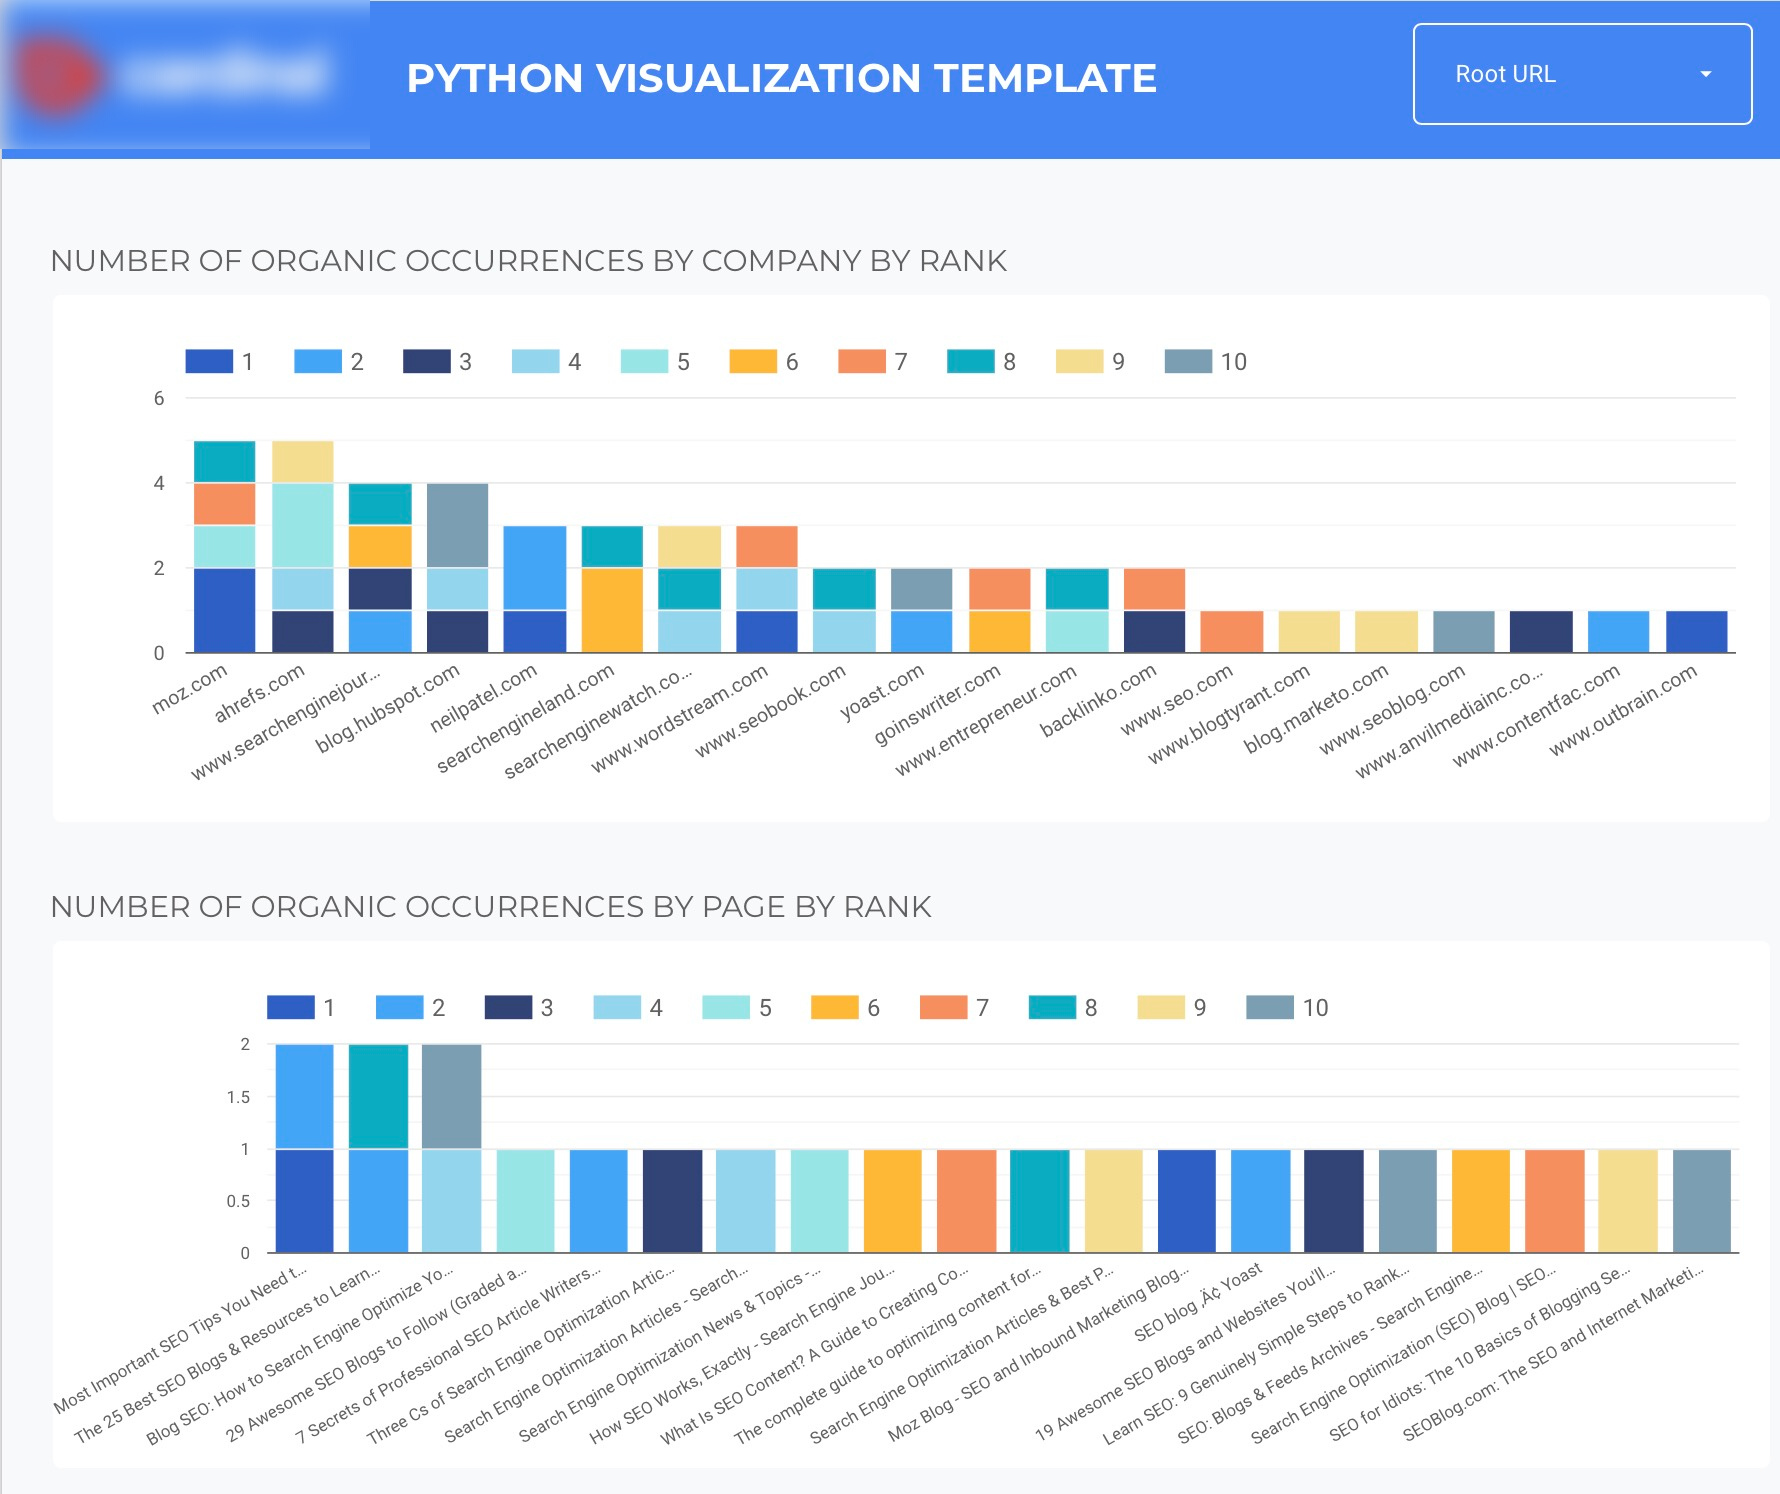 Data Studio template for analyzing python web scraping data.